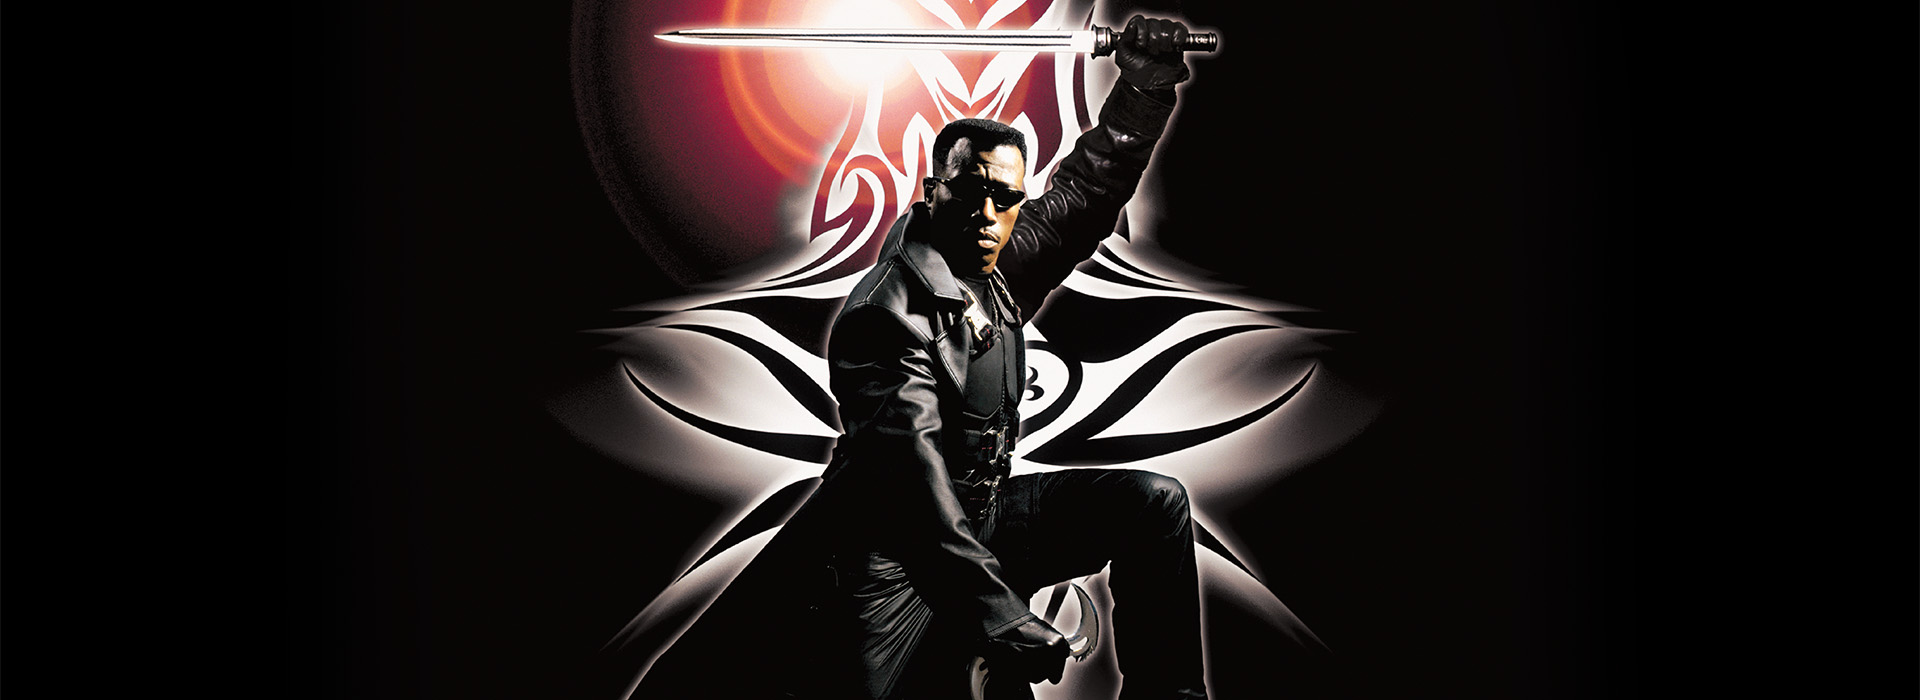 Movie poster Blade